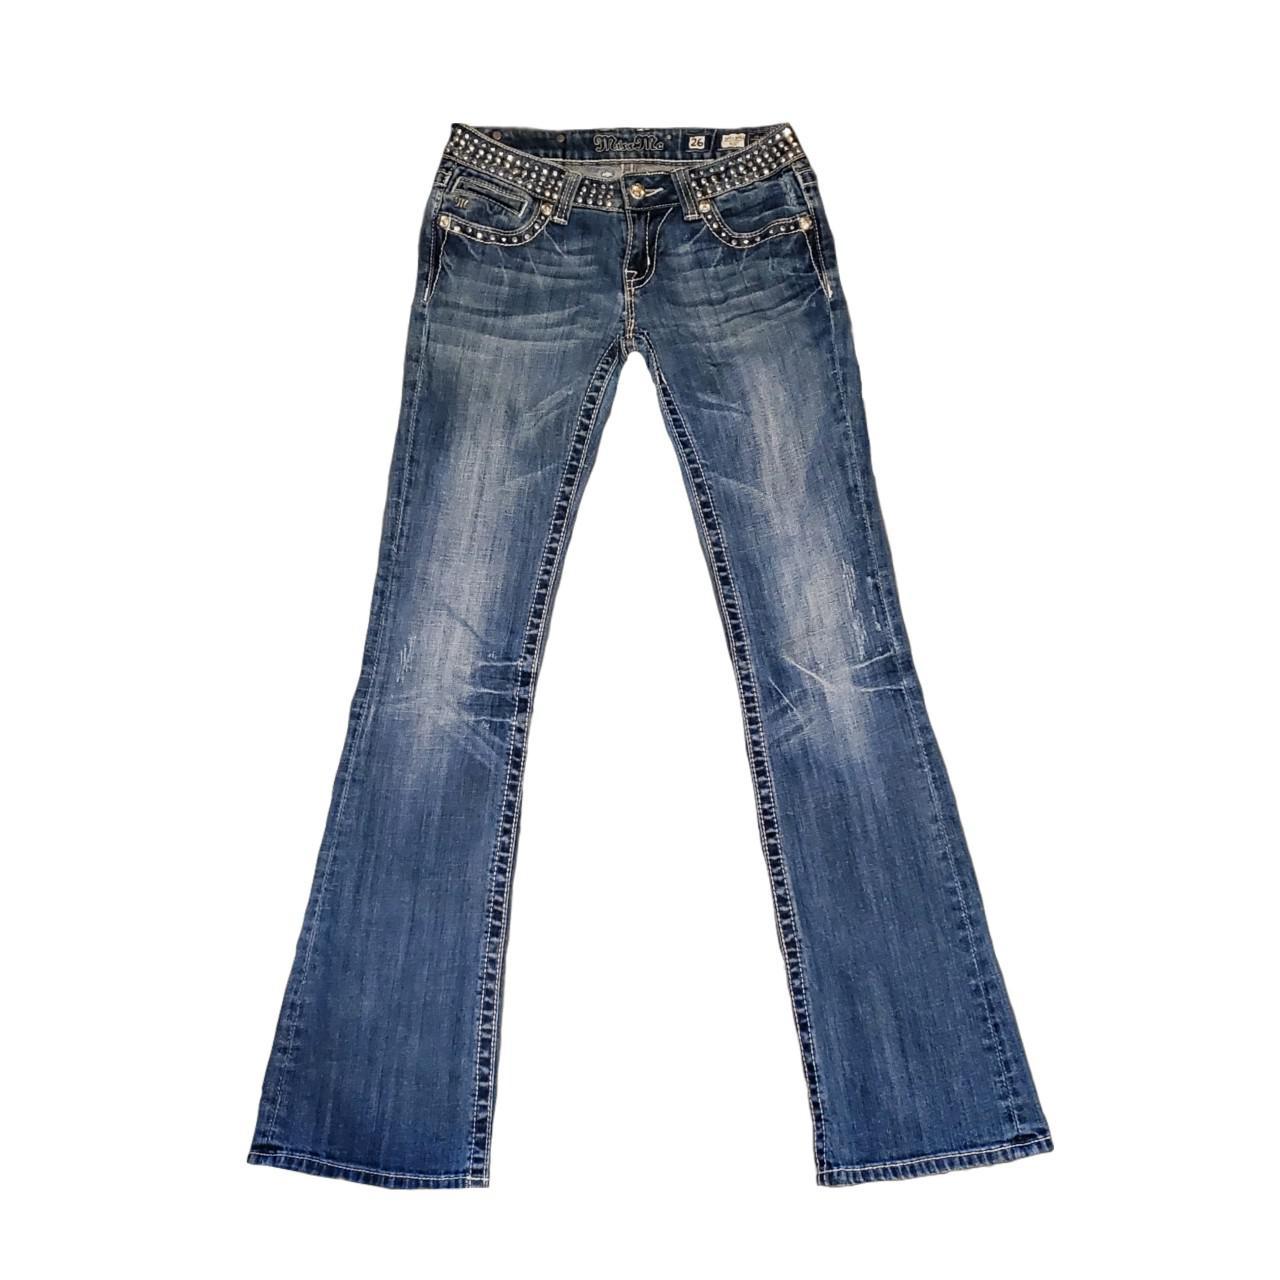 Y2k flare low rise jeans - Rhinestone embellishments... - Depop